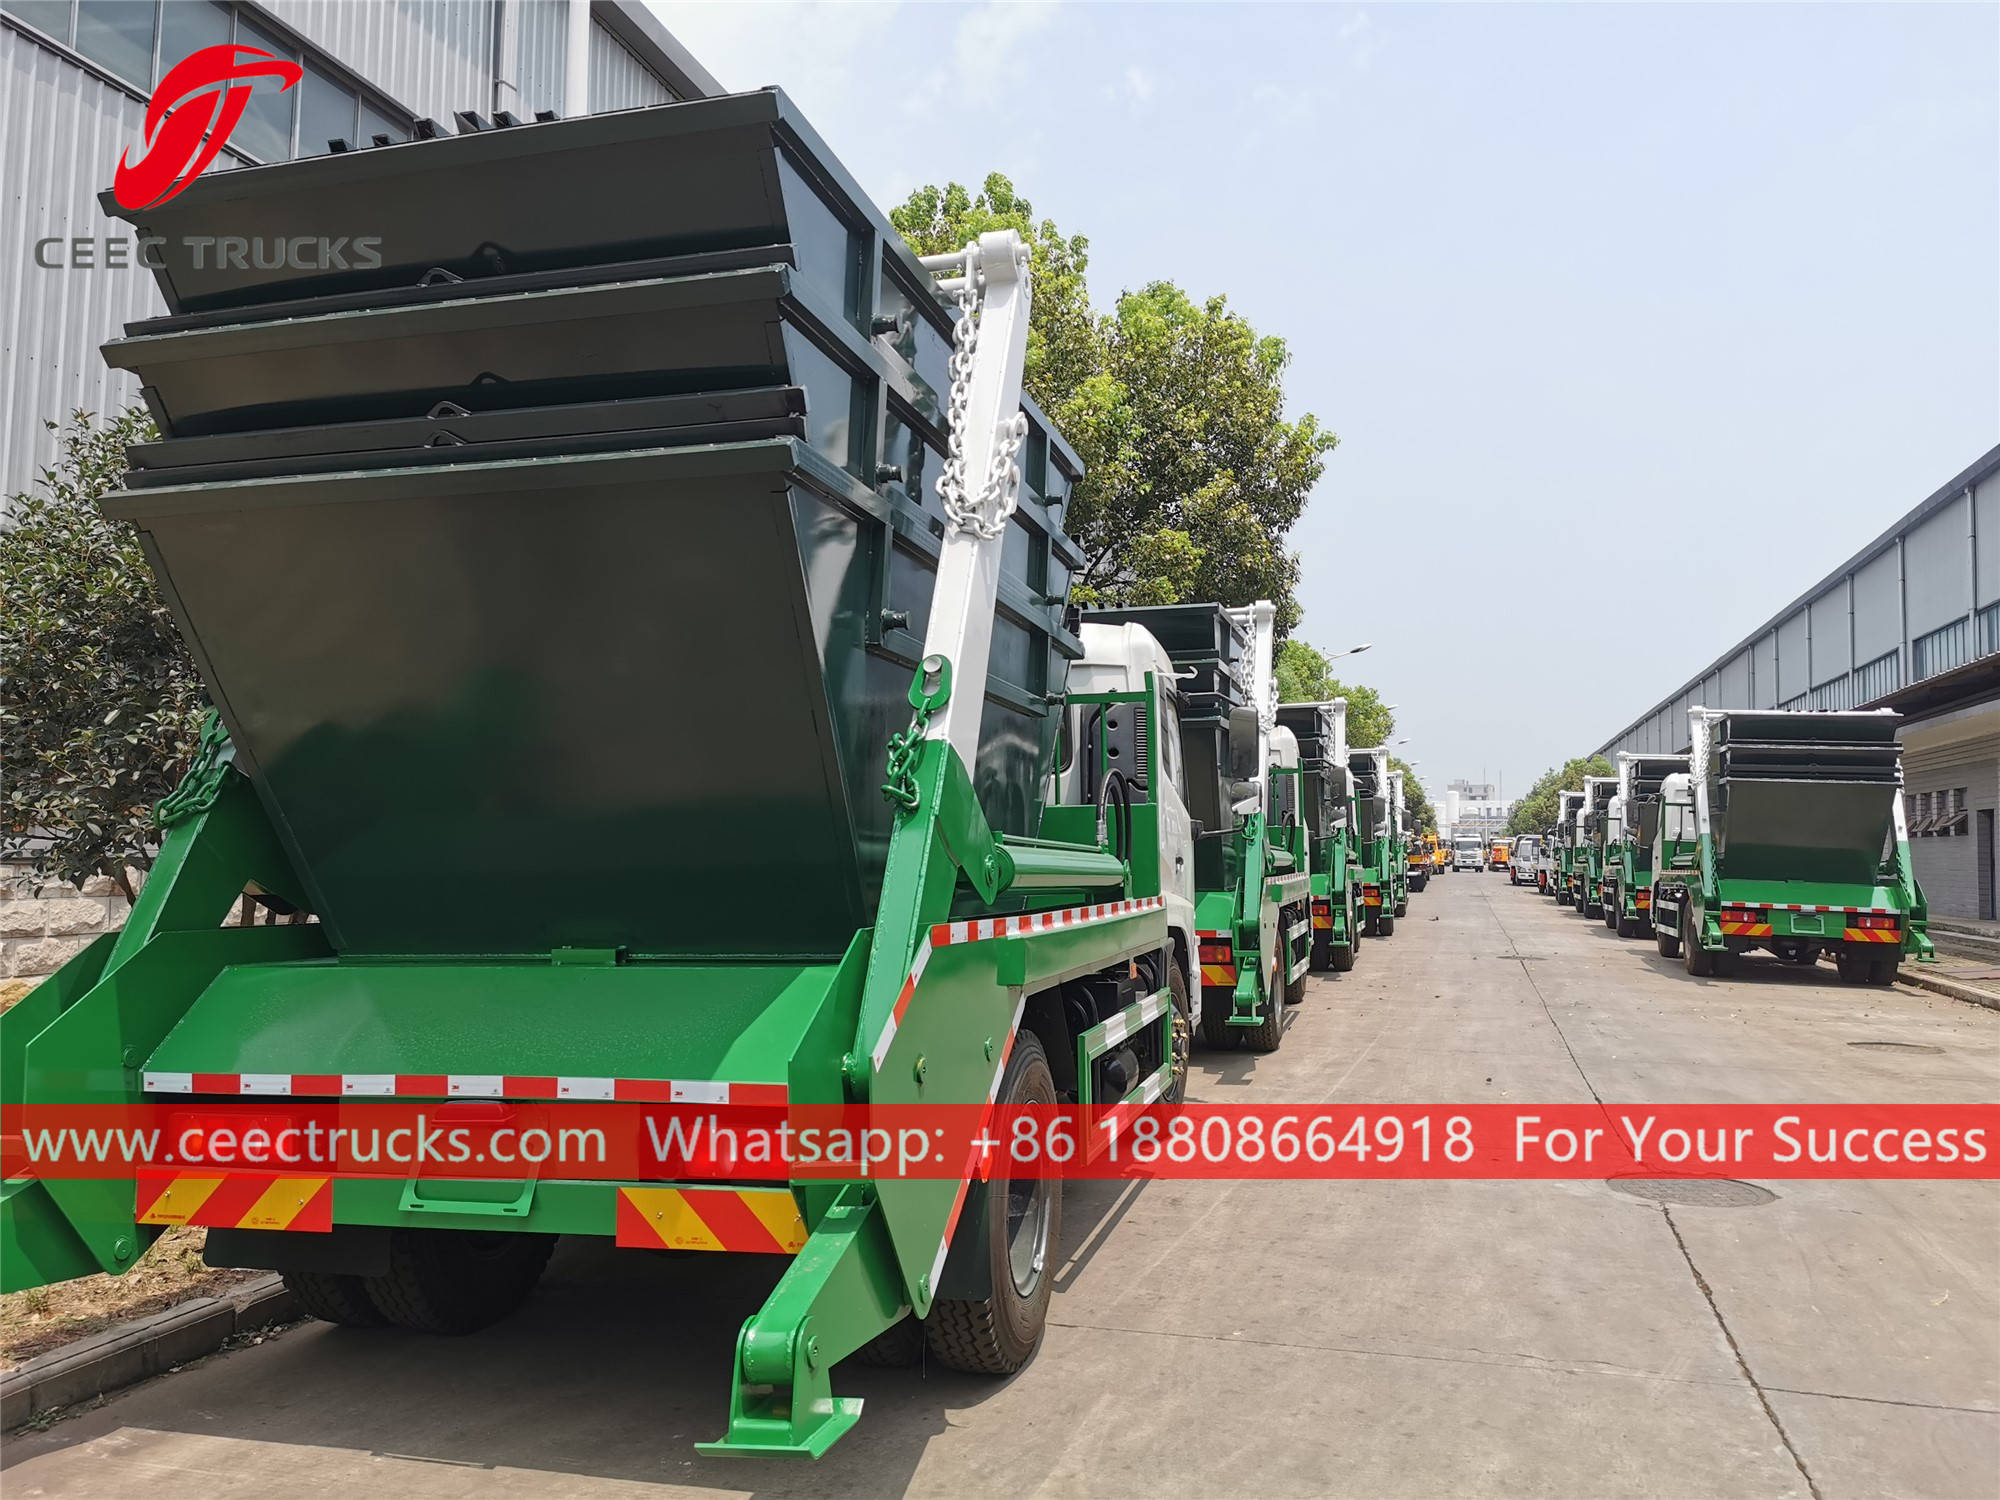 20 units RHD swing arm refuse trucks for Tanzania